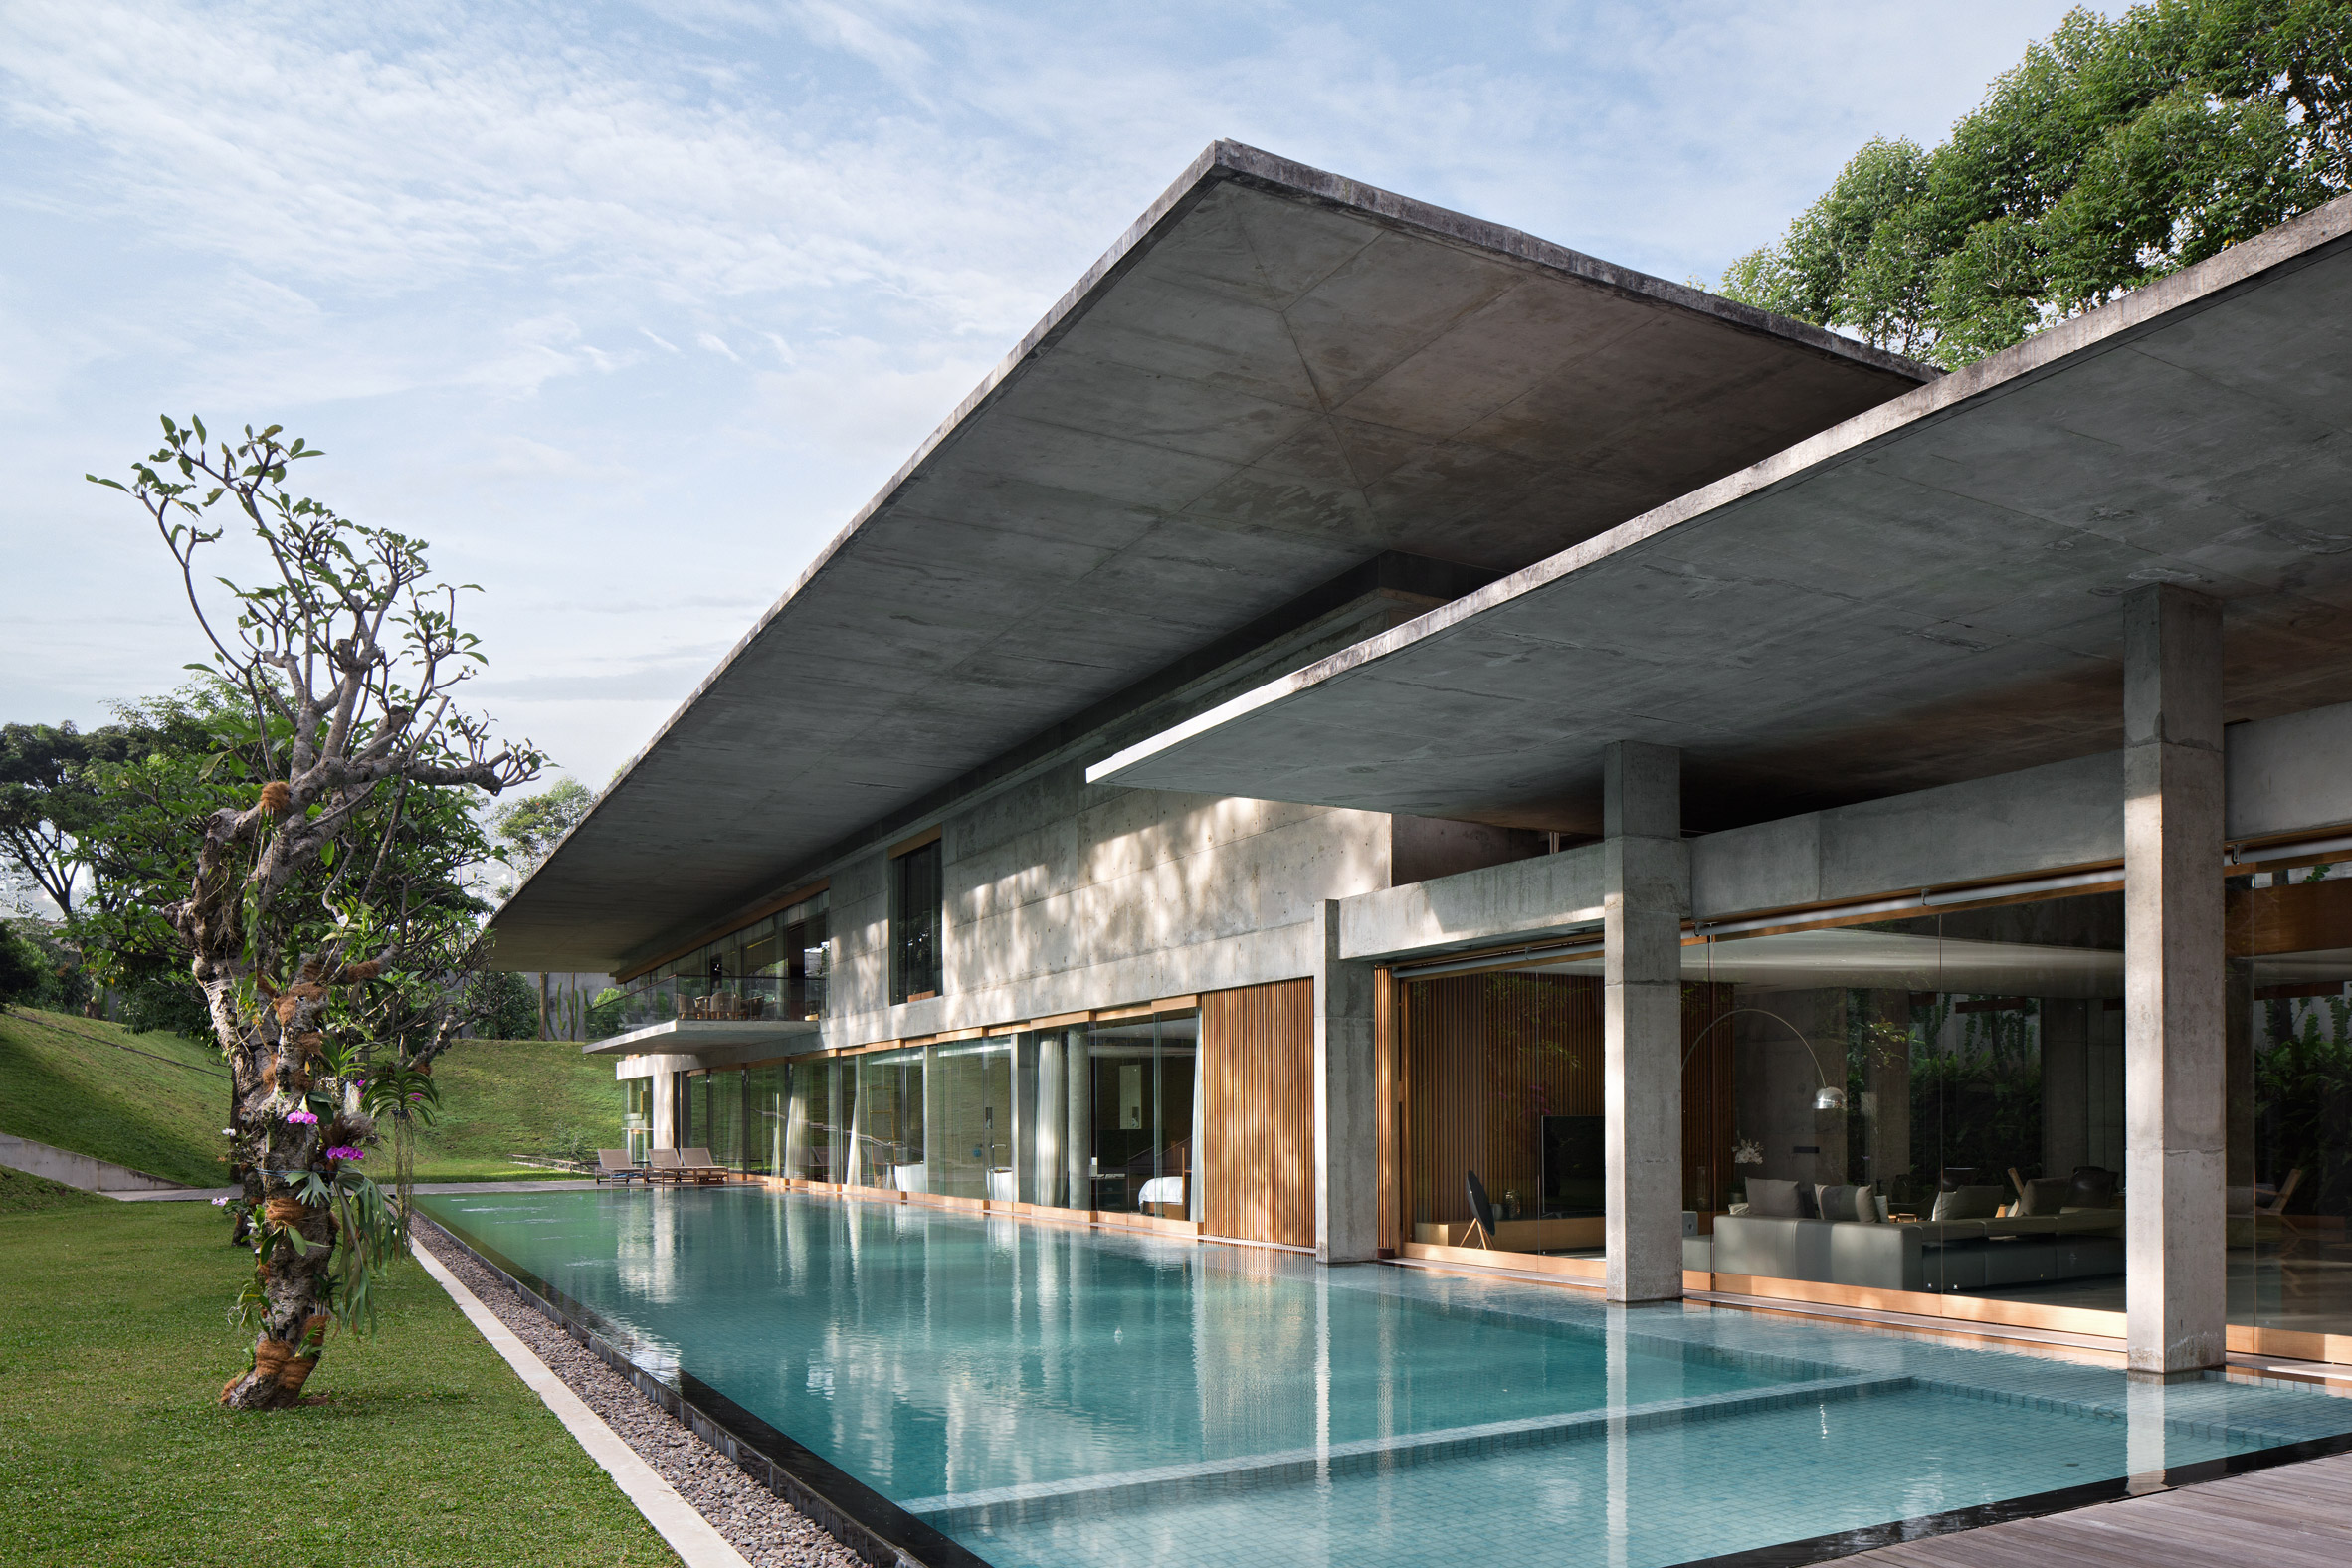 Concrete house in Indonesia